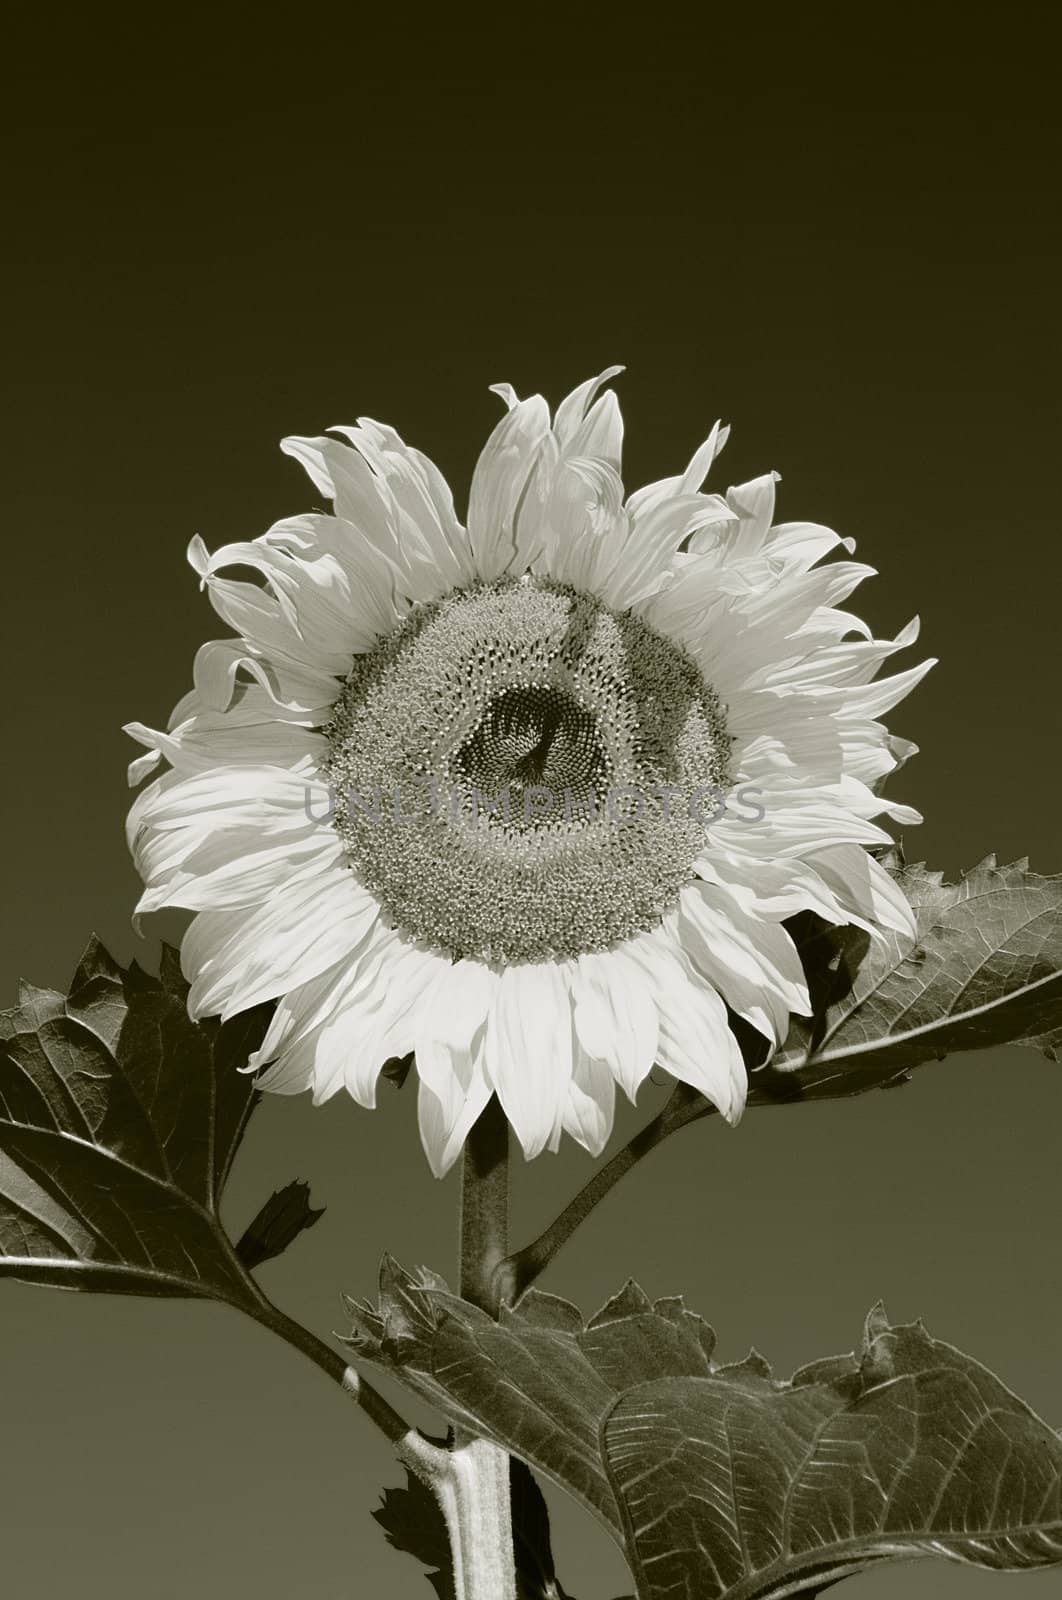 the sunflower by Kuzma